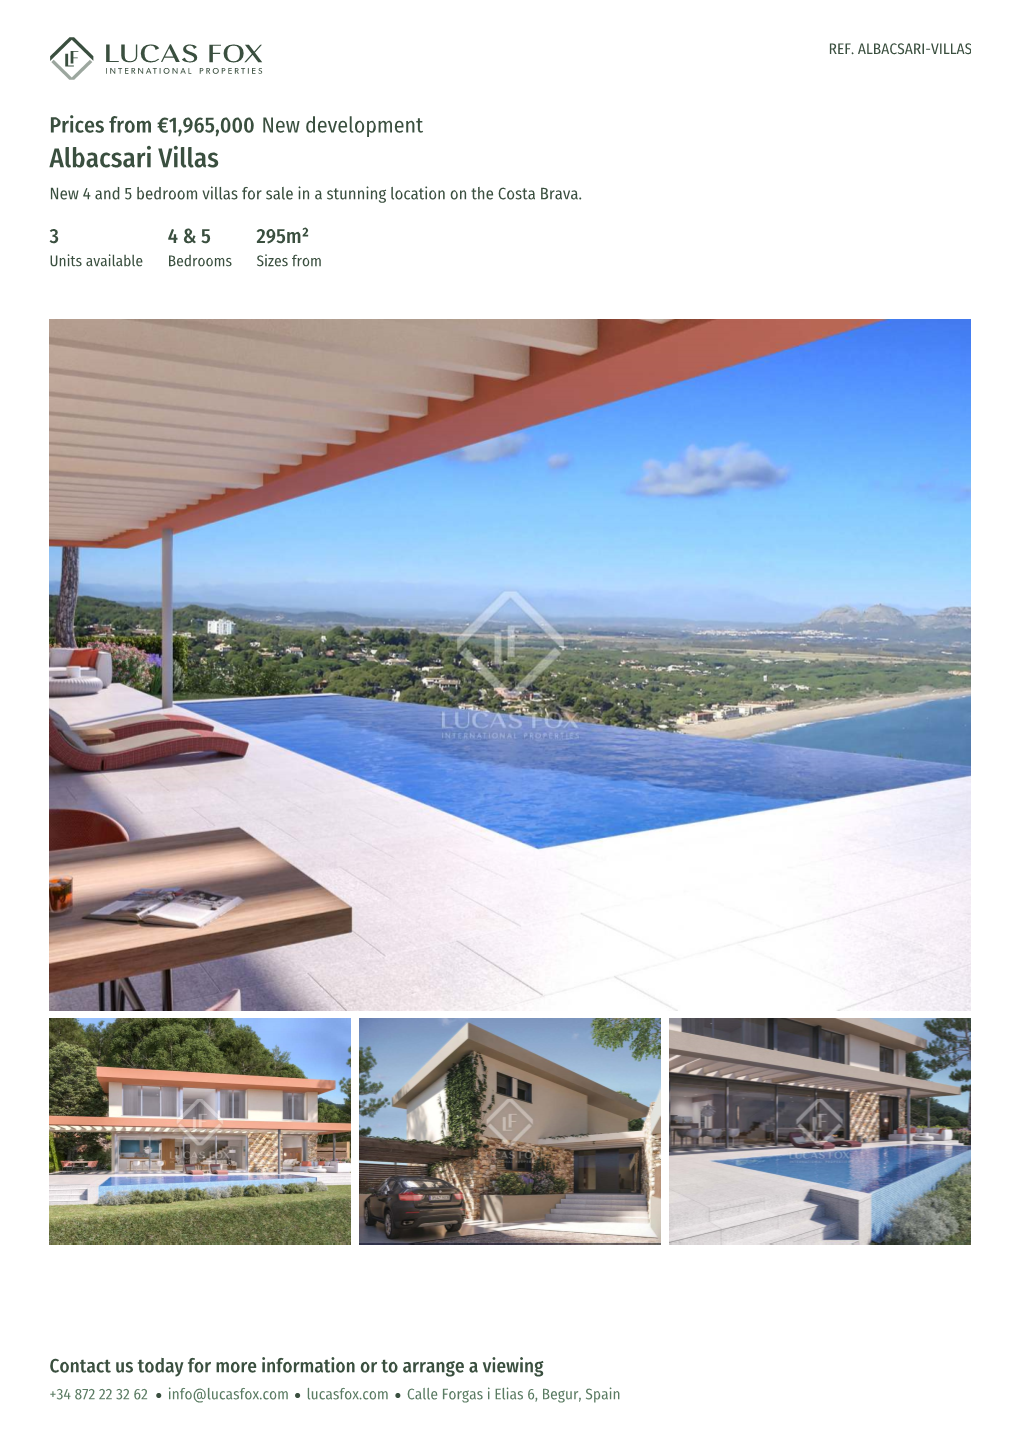 Albacsari Villas New 4 and 5 Bedroom Villas for Sale in a Stunning Location on the Costa Brava